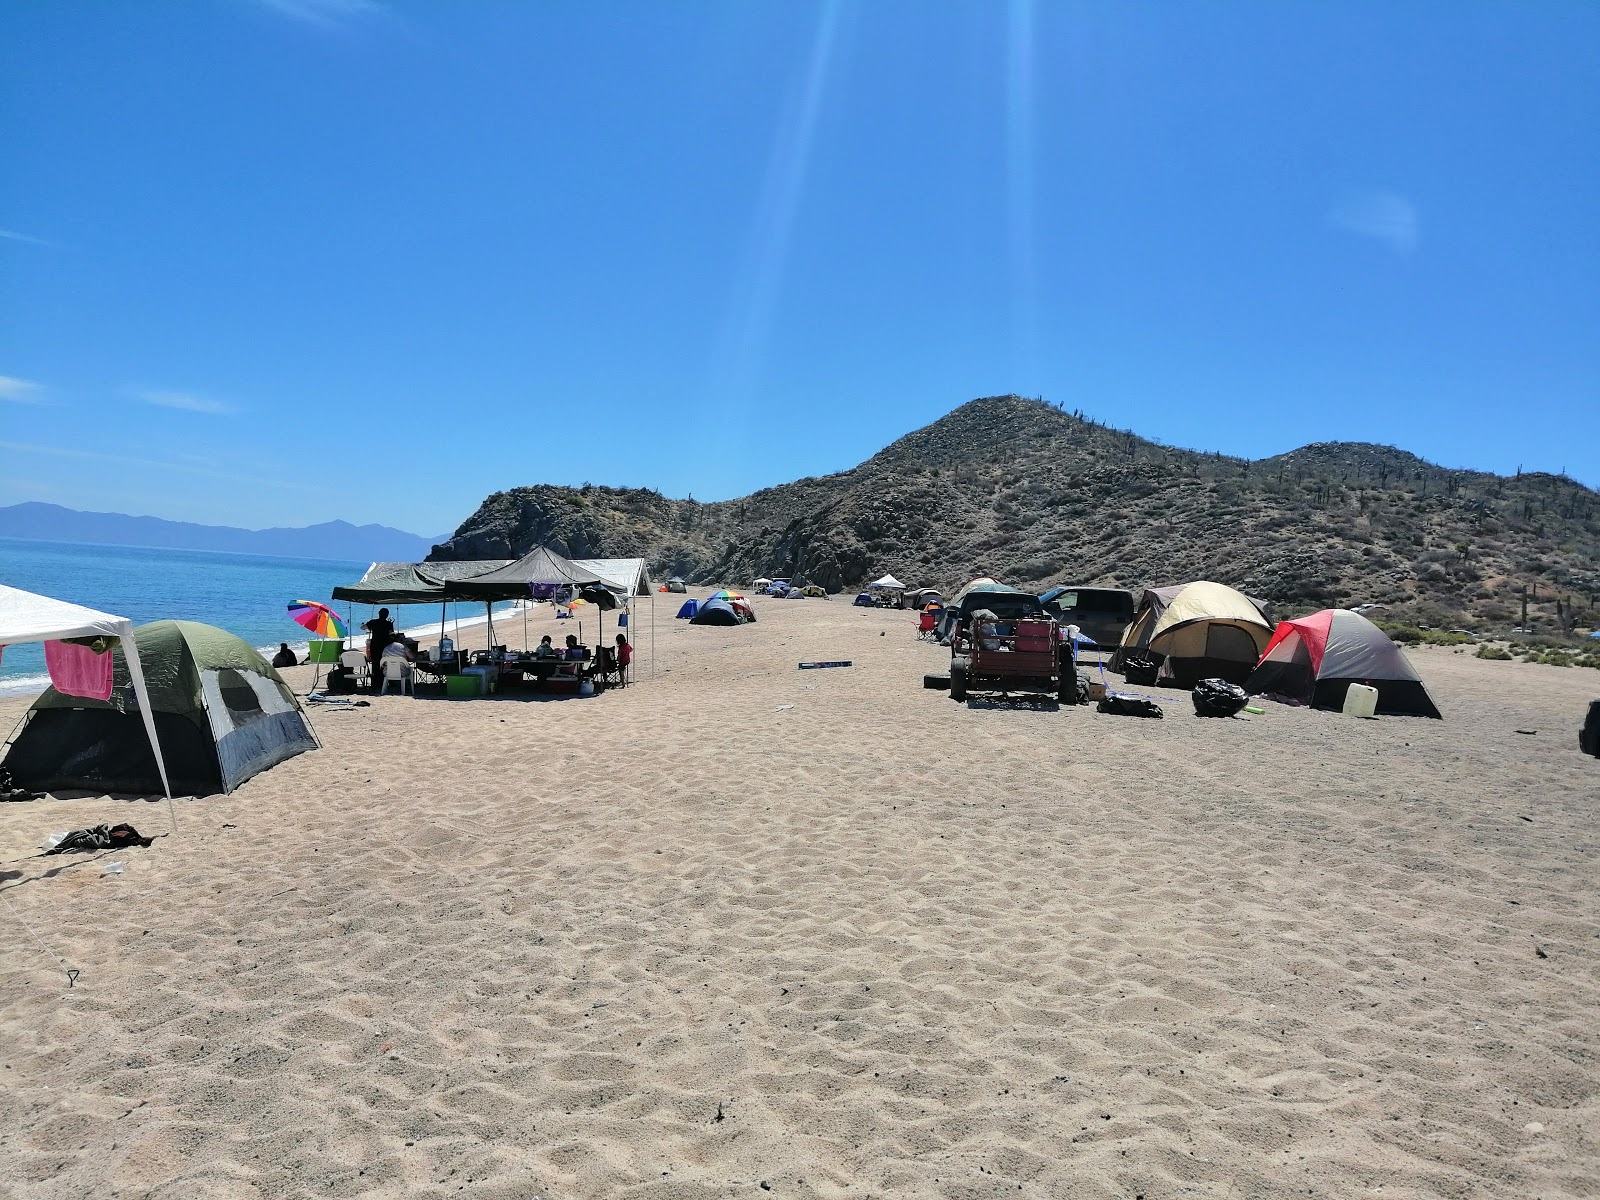 Zdjęcie Plaża El Saltito poparte klifami